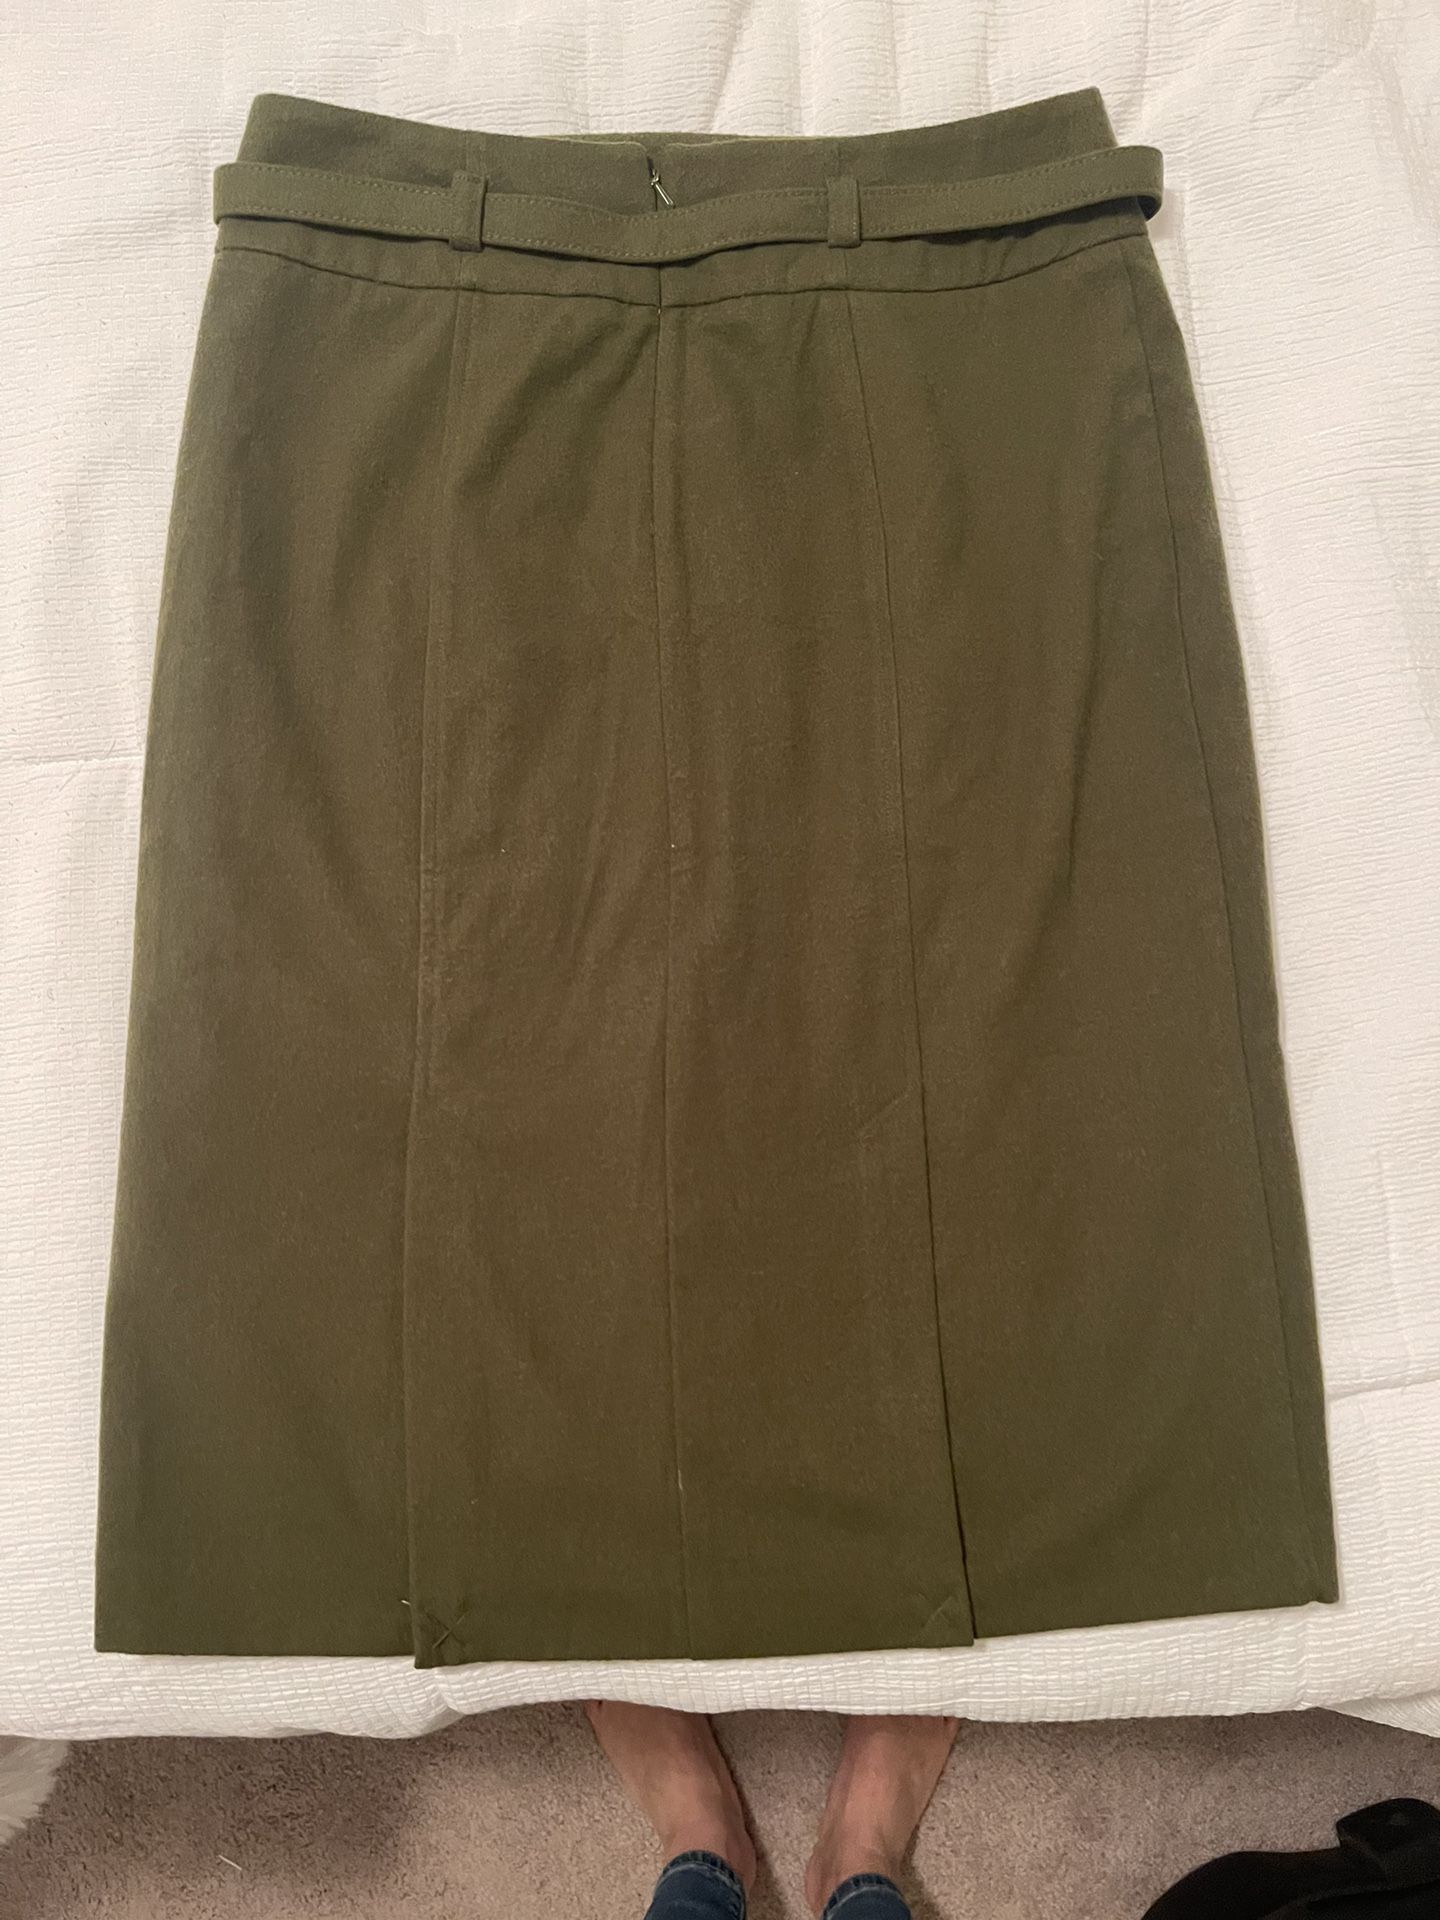 New York & company Skirt